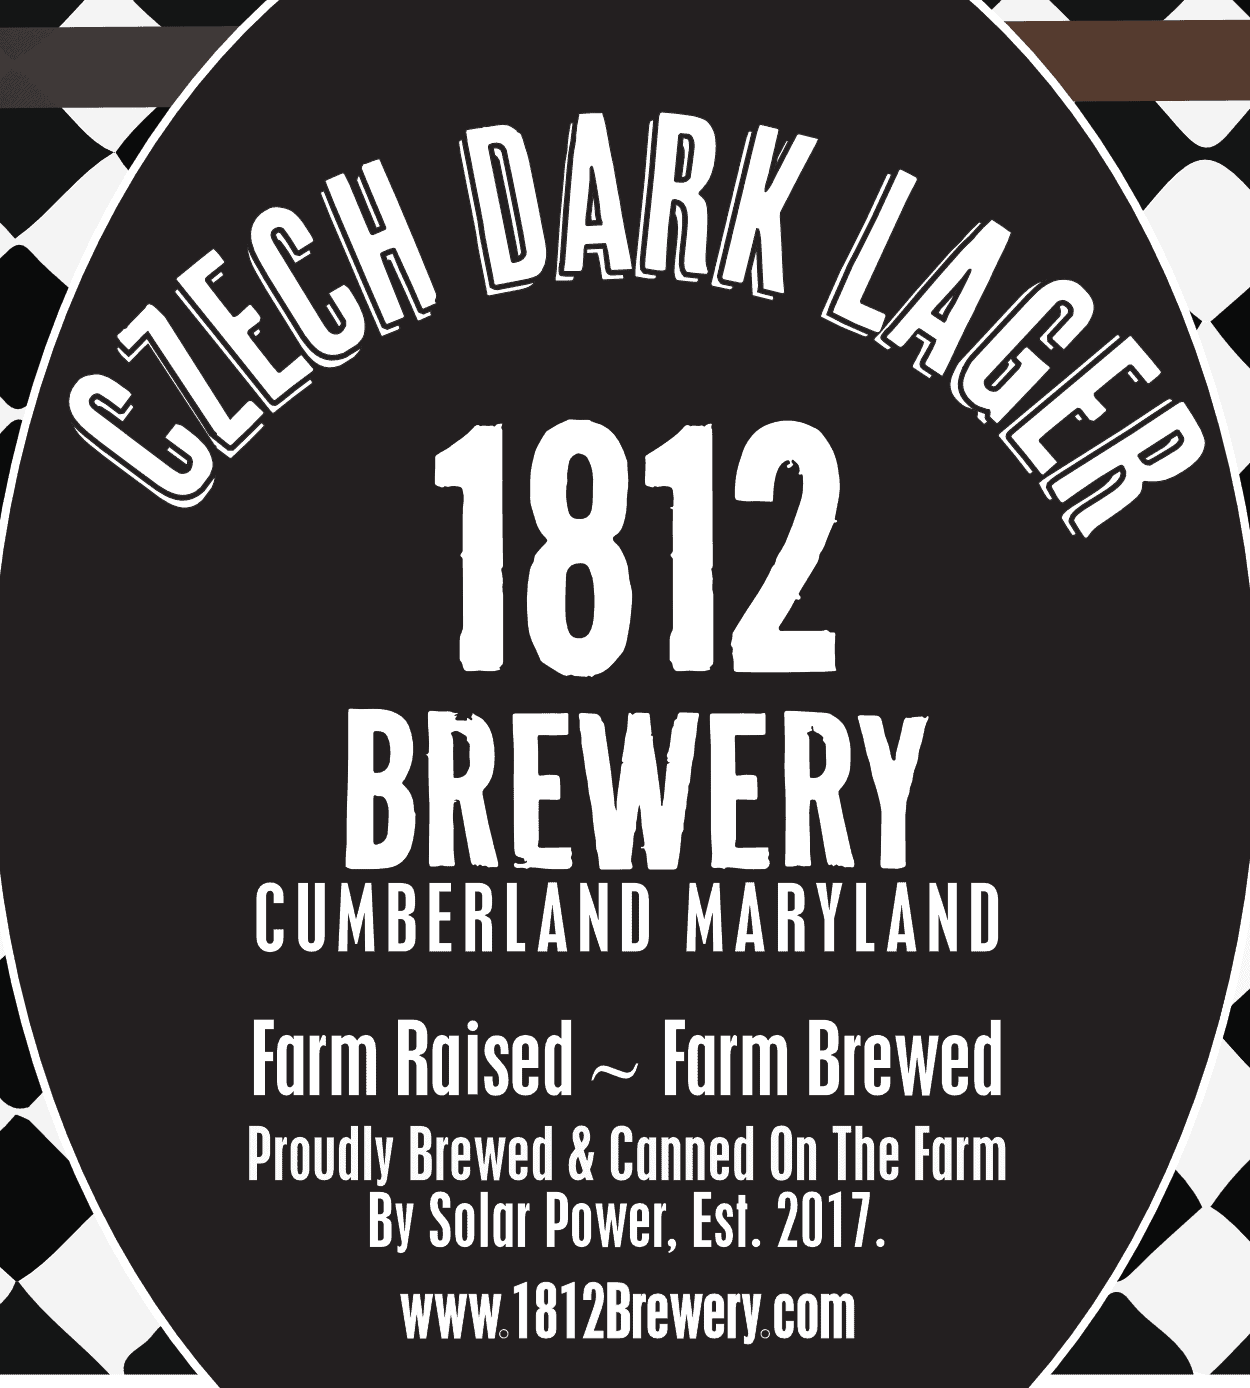 Czech Dark Lager beer label.